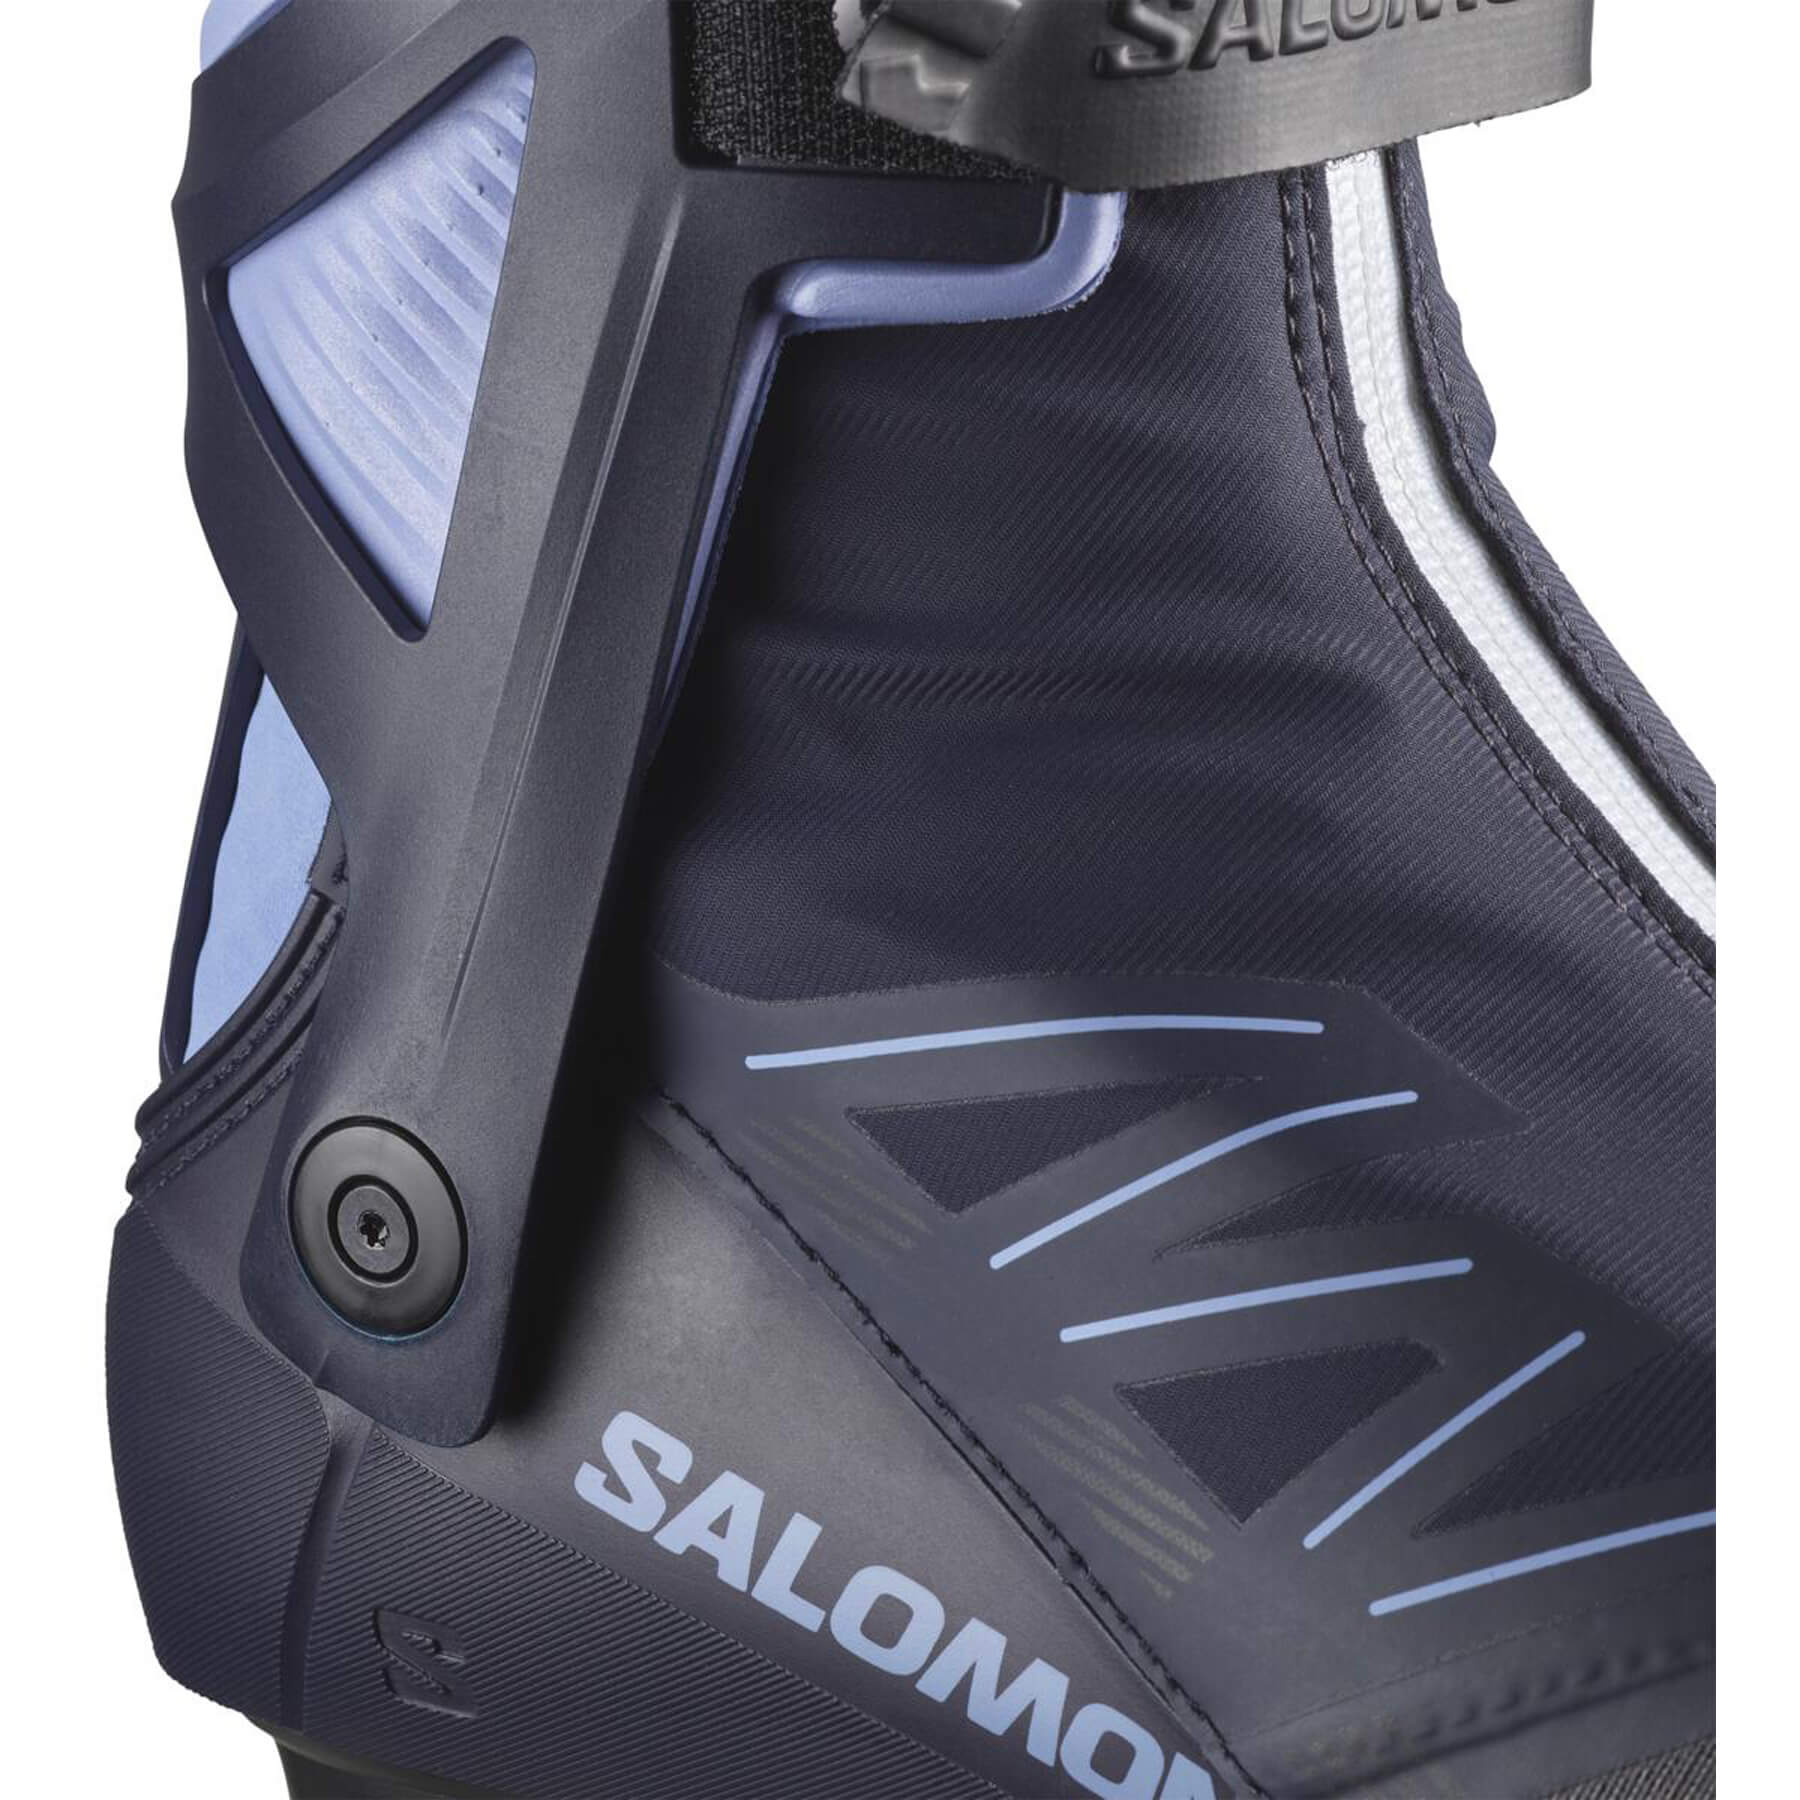 Salomon RS8 Vitane Prolink Skate Boot